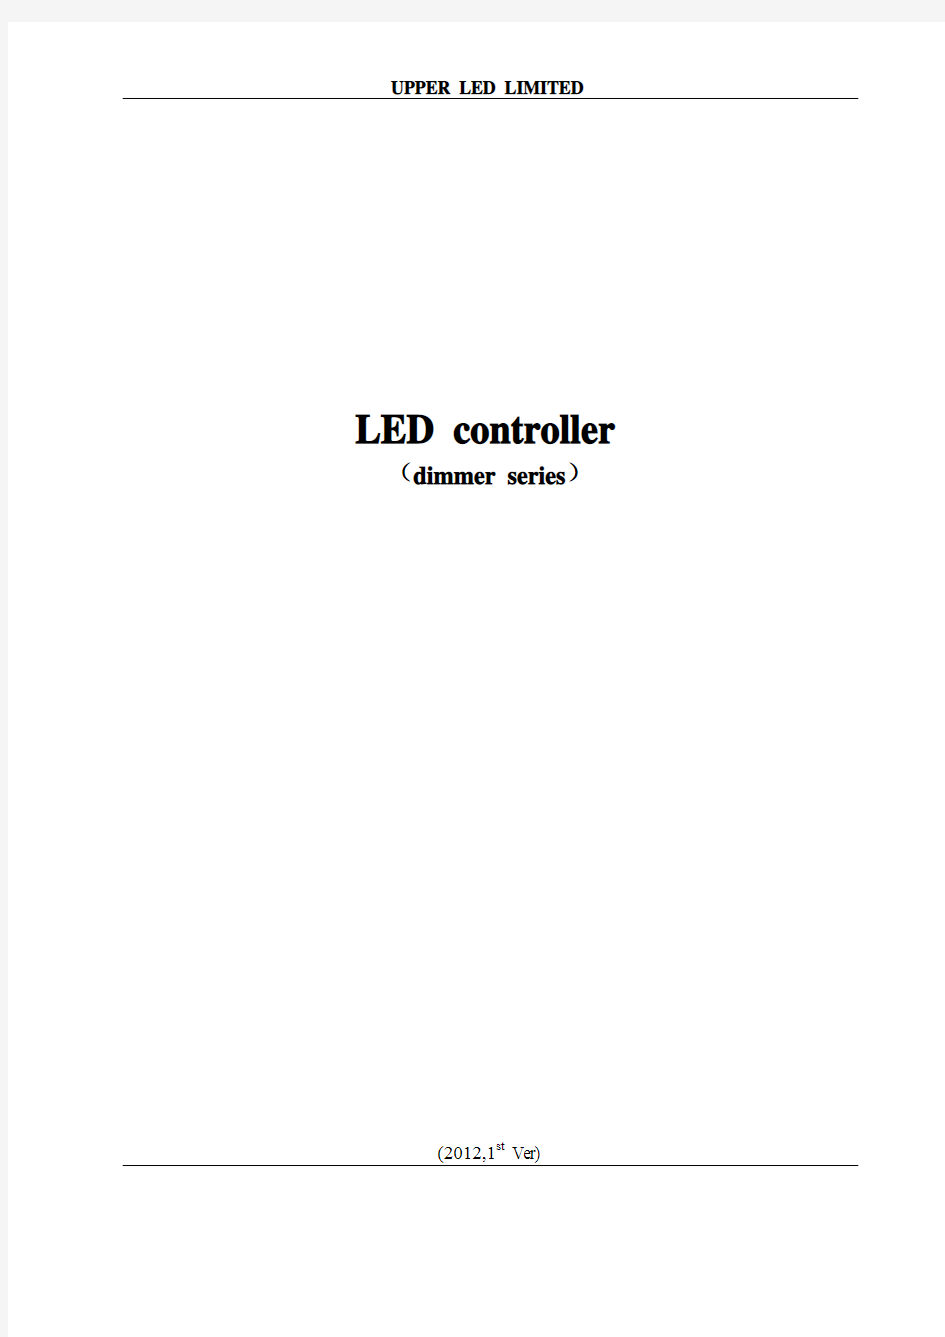 LED controller dimmer series2012-UPPER